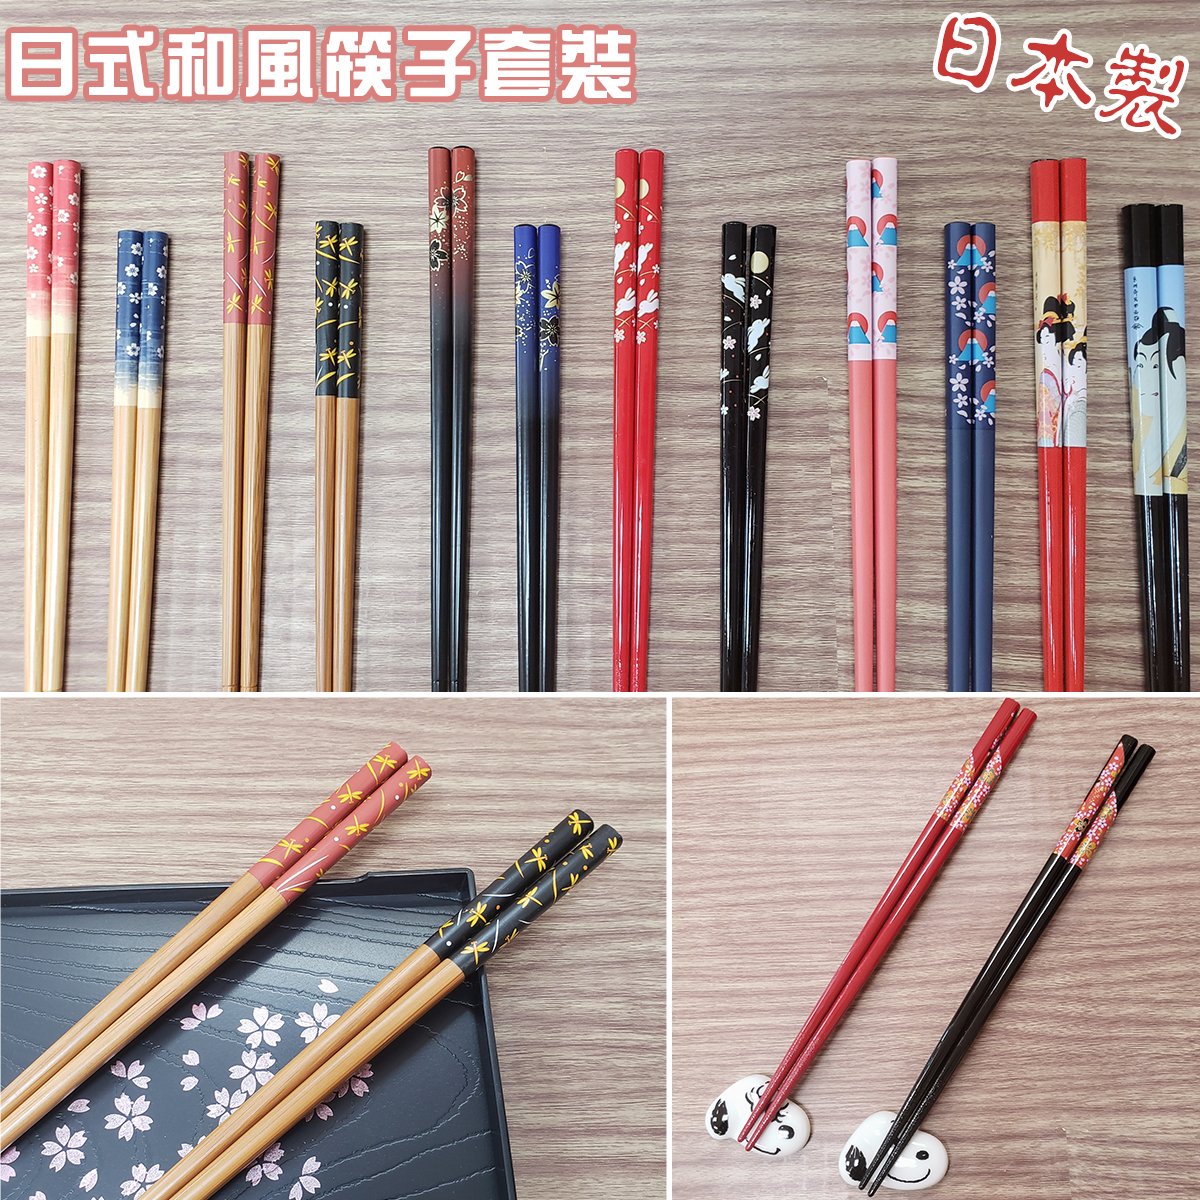 Chopsticks - Blue + Red 2in1 Pair ( Made in Japan)